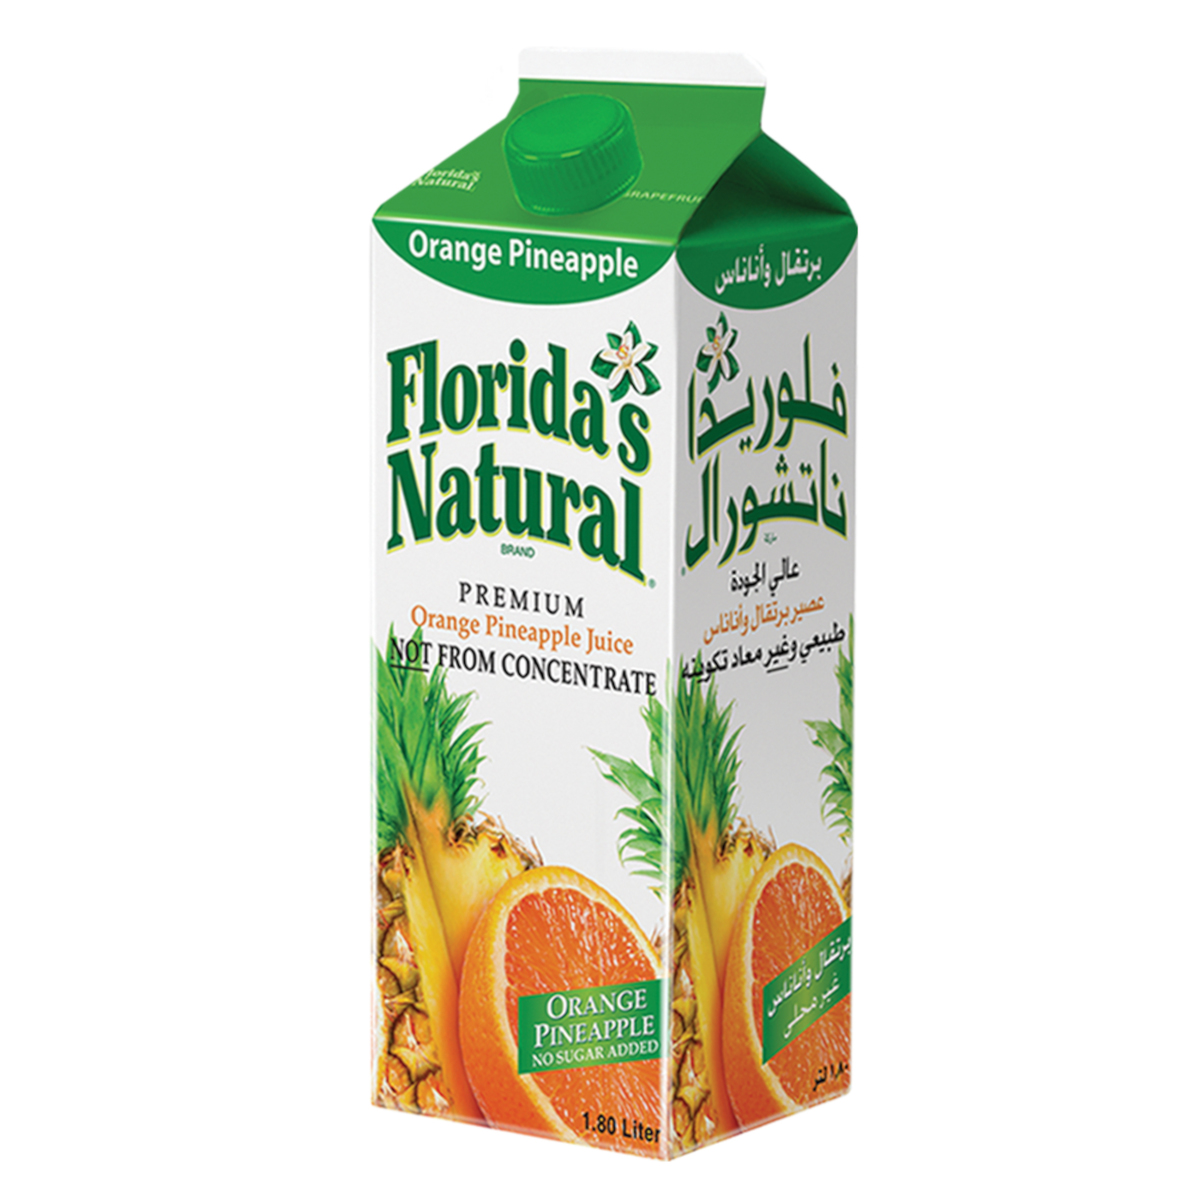 Florida's Natural Premium Orange Pineapple Juice 1.8 Litres